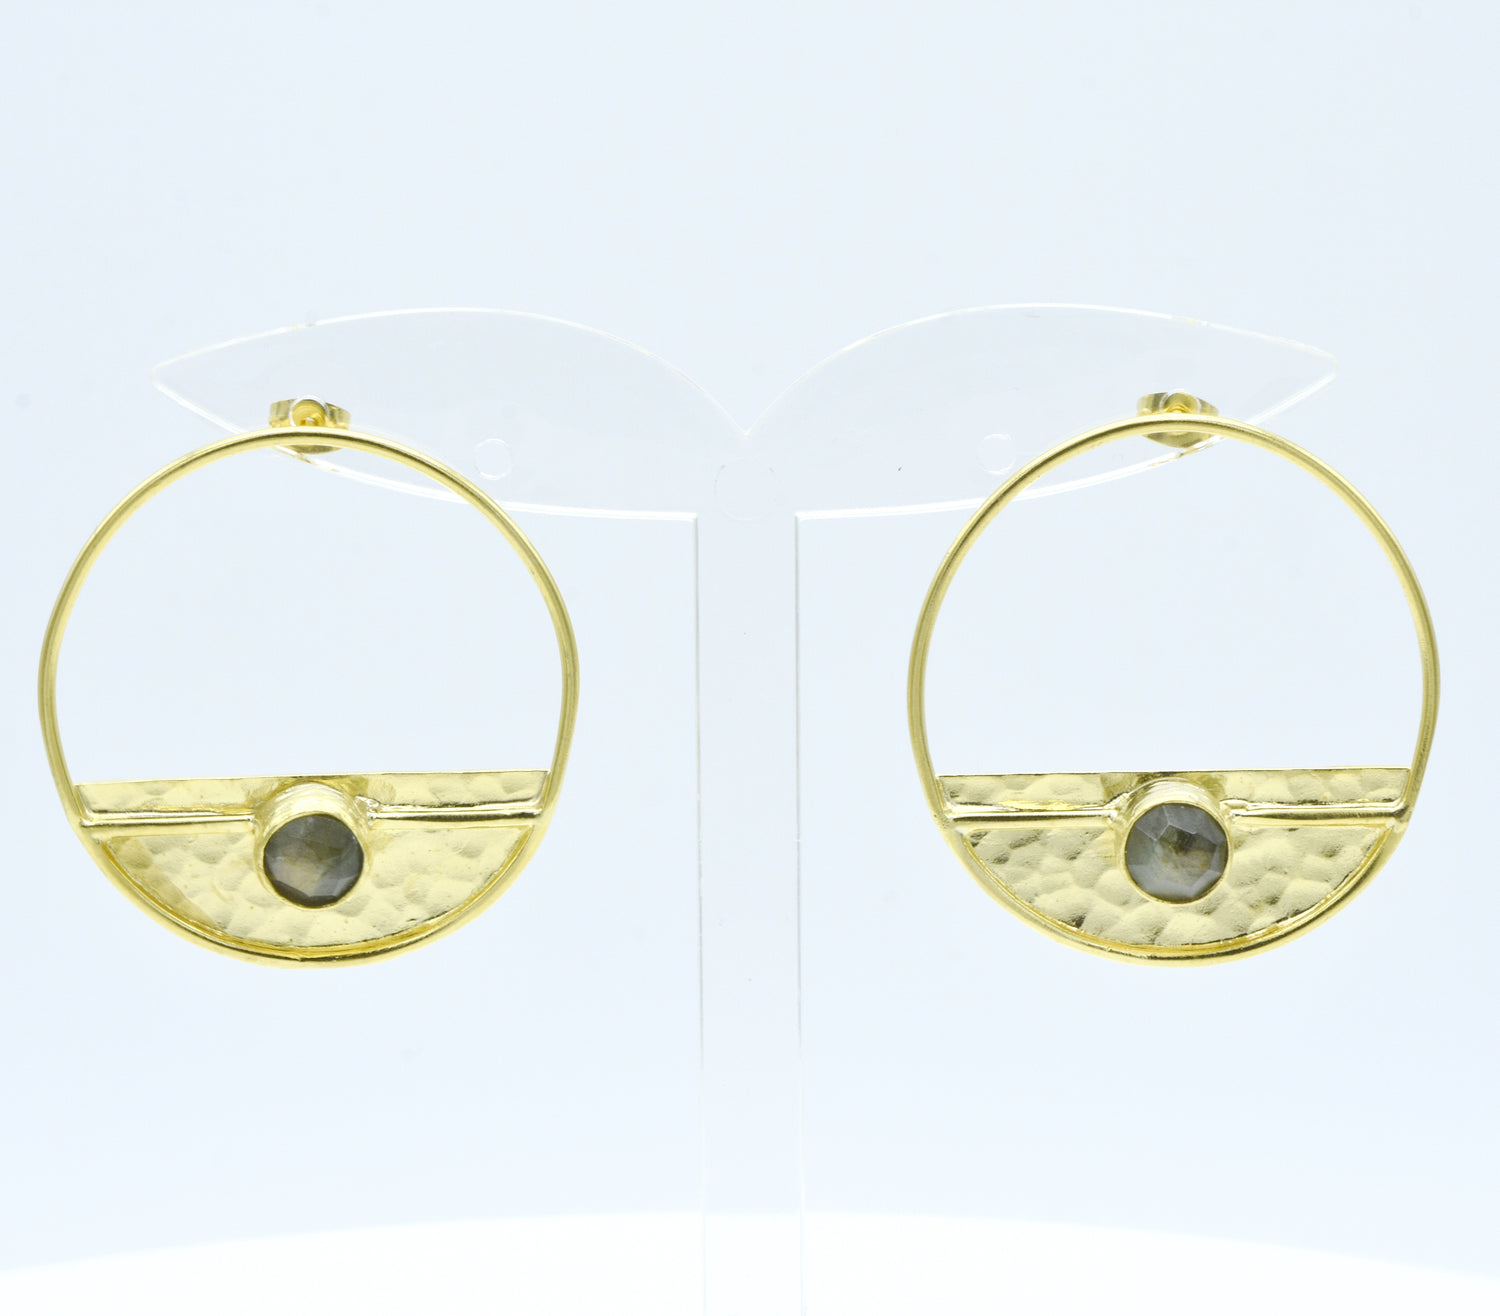 Aylas Labradorite earrings - 21ct Gold plated semi precious gemstone - Handmade in Ottoman Style by Artisan